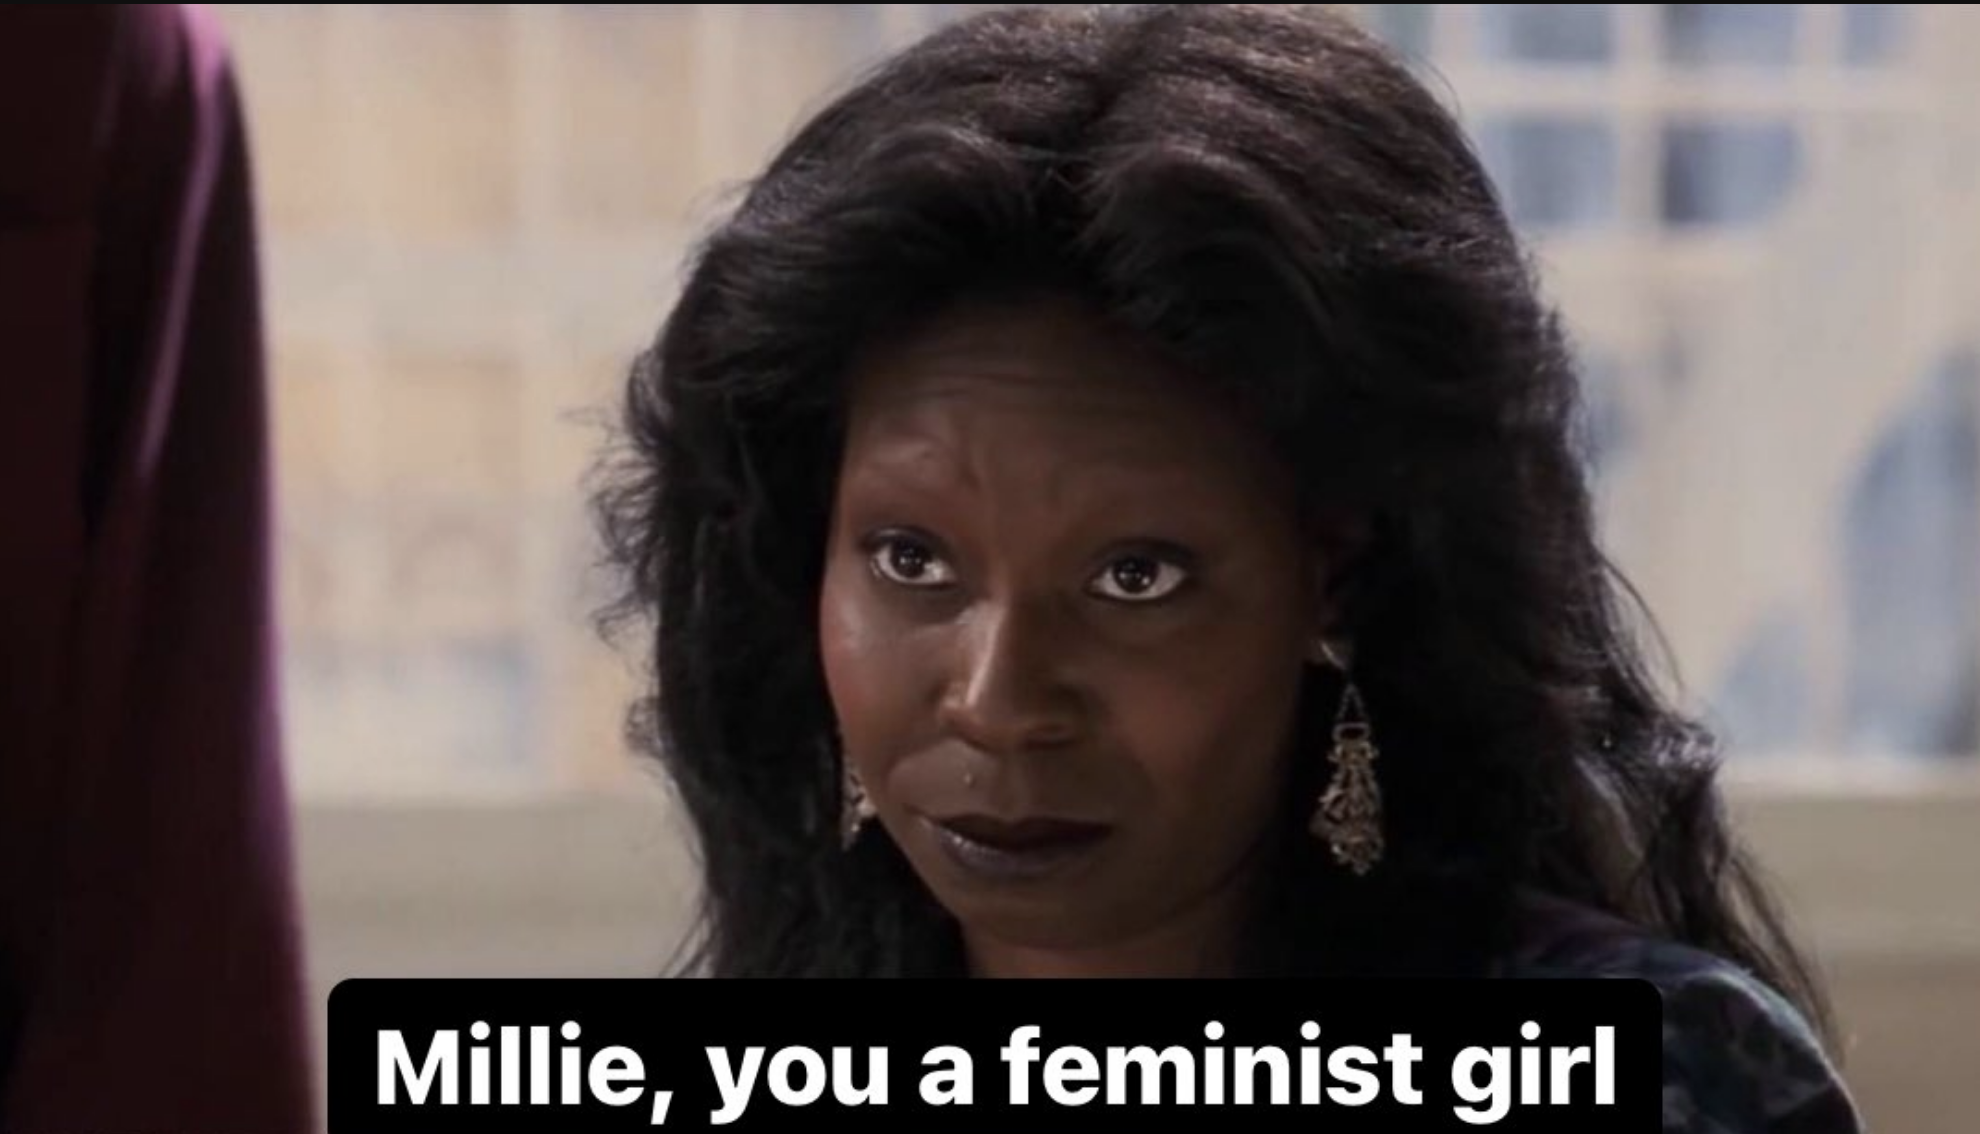 millie you a feminist girl written under whoopi&#x27;s face